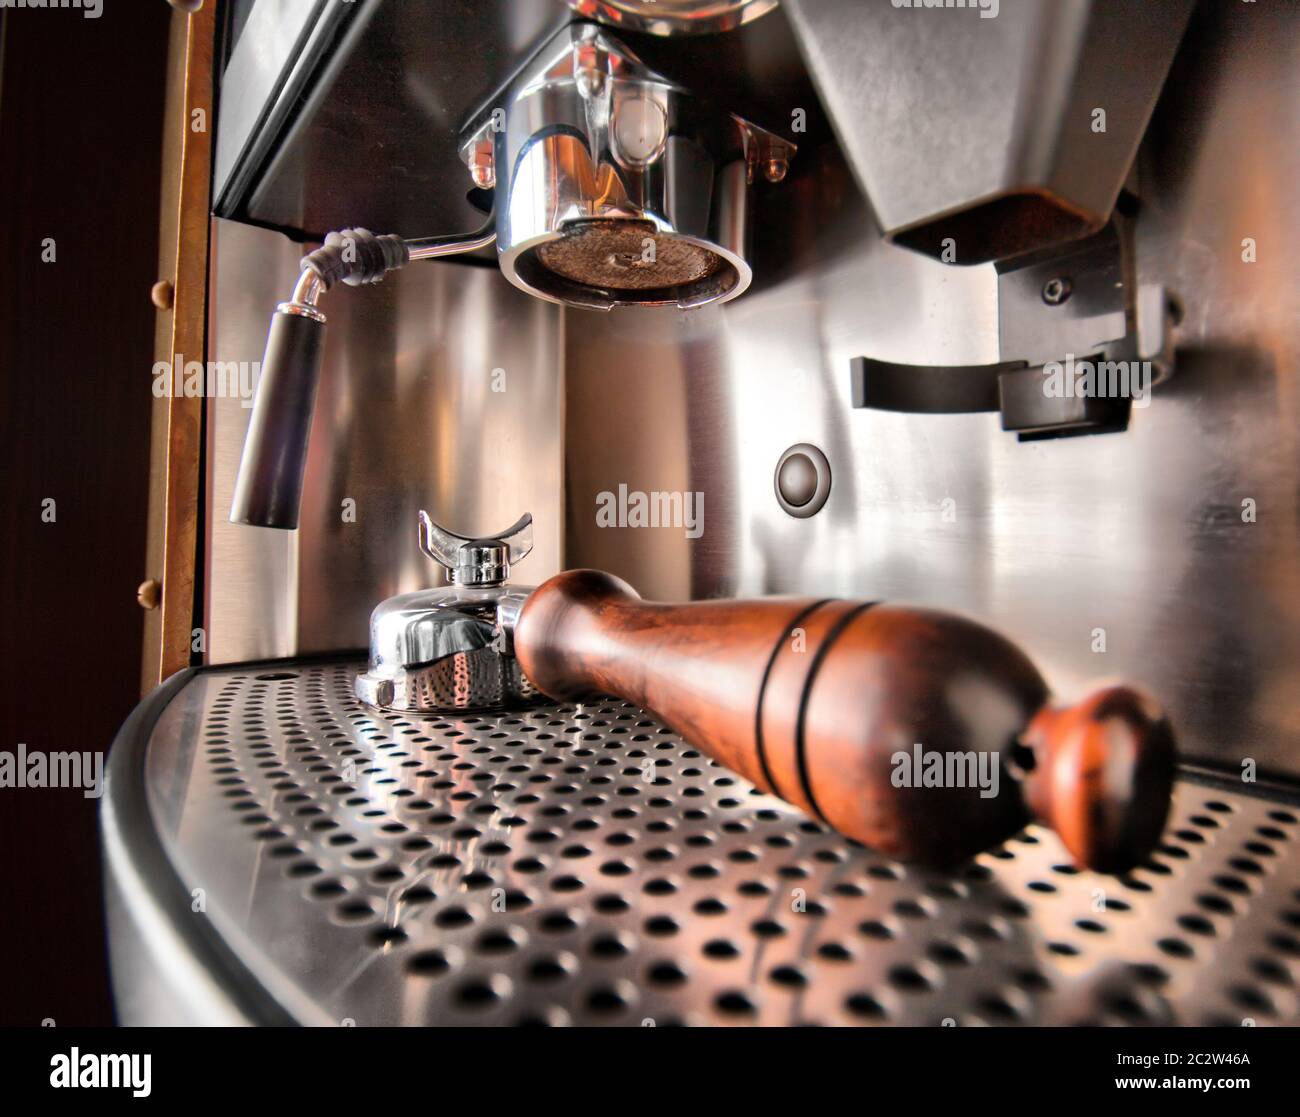 https://c8.alamy.com/comp/2C2W46A/close-up-of-retro-coffee-machine-in-old-fashion-cafe-2C2W46A.jpg